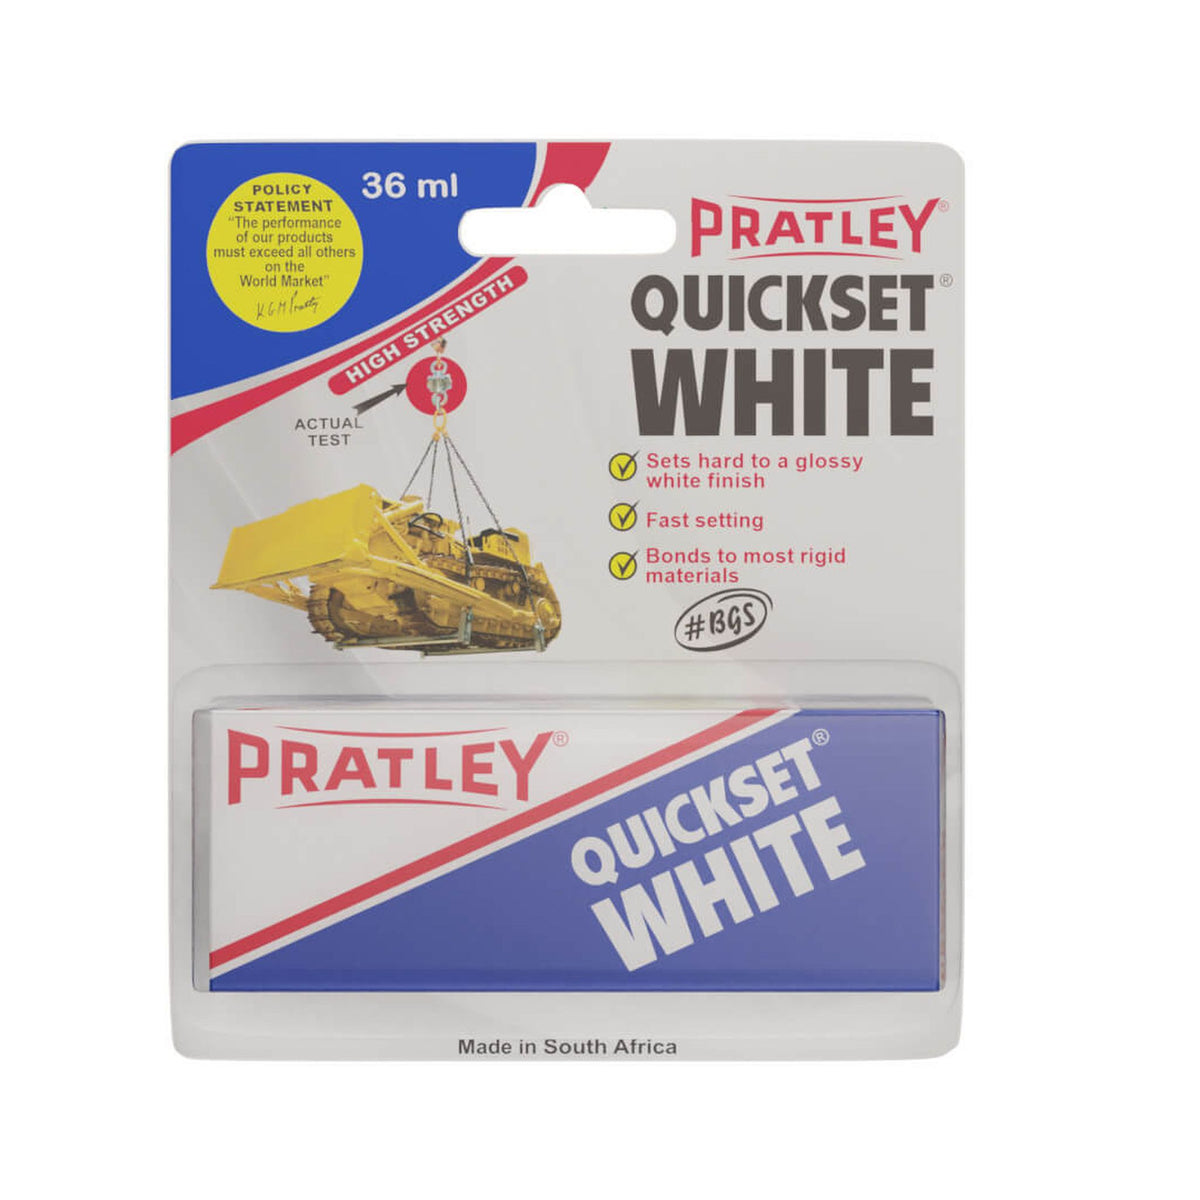 Pratley Quickset White Epoxy Glue